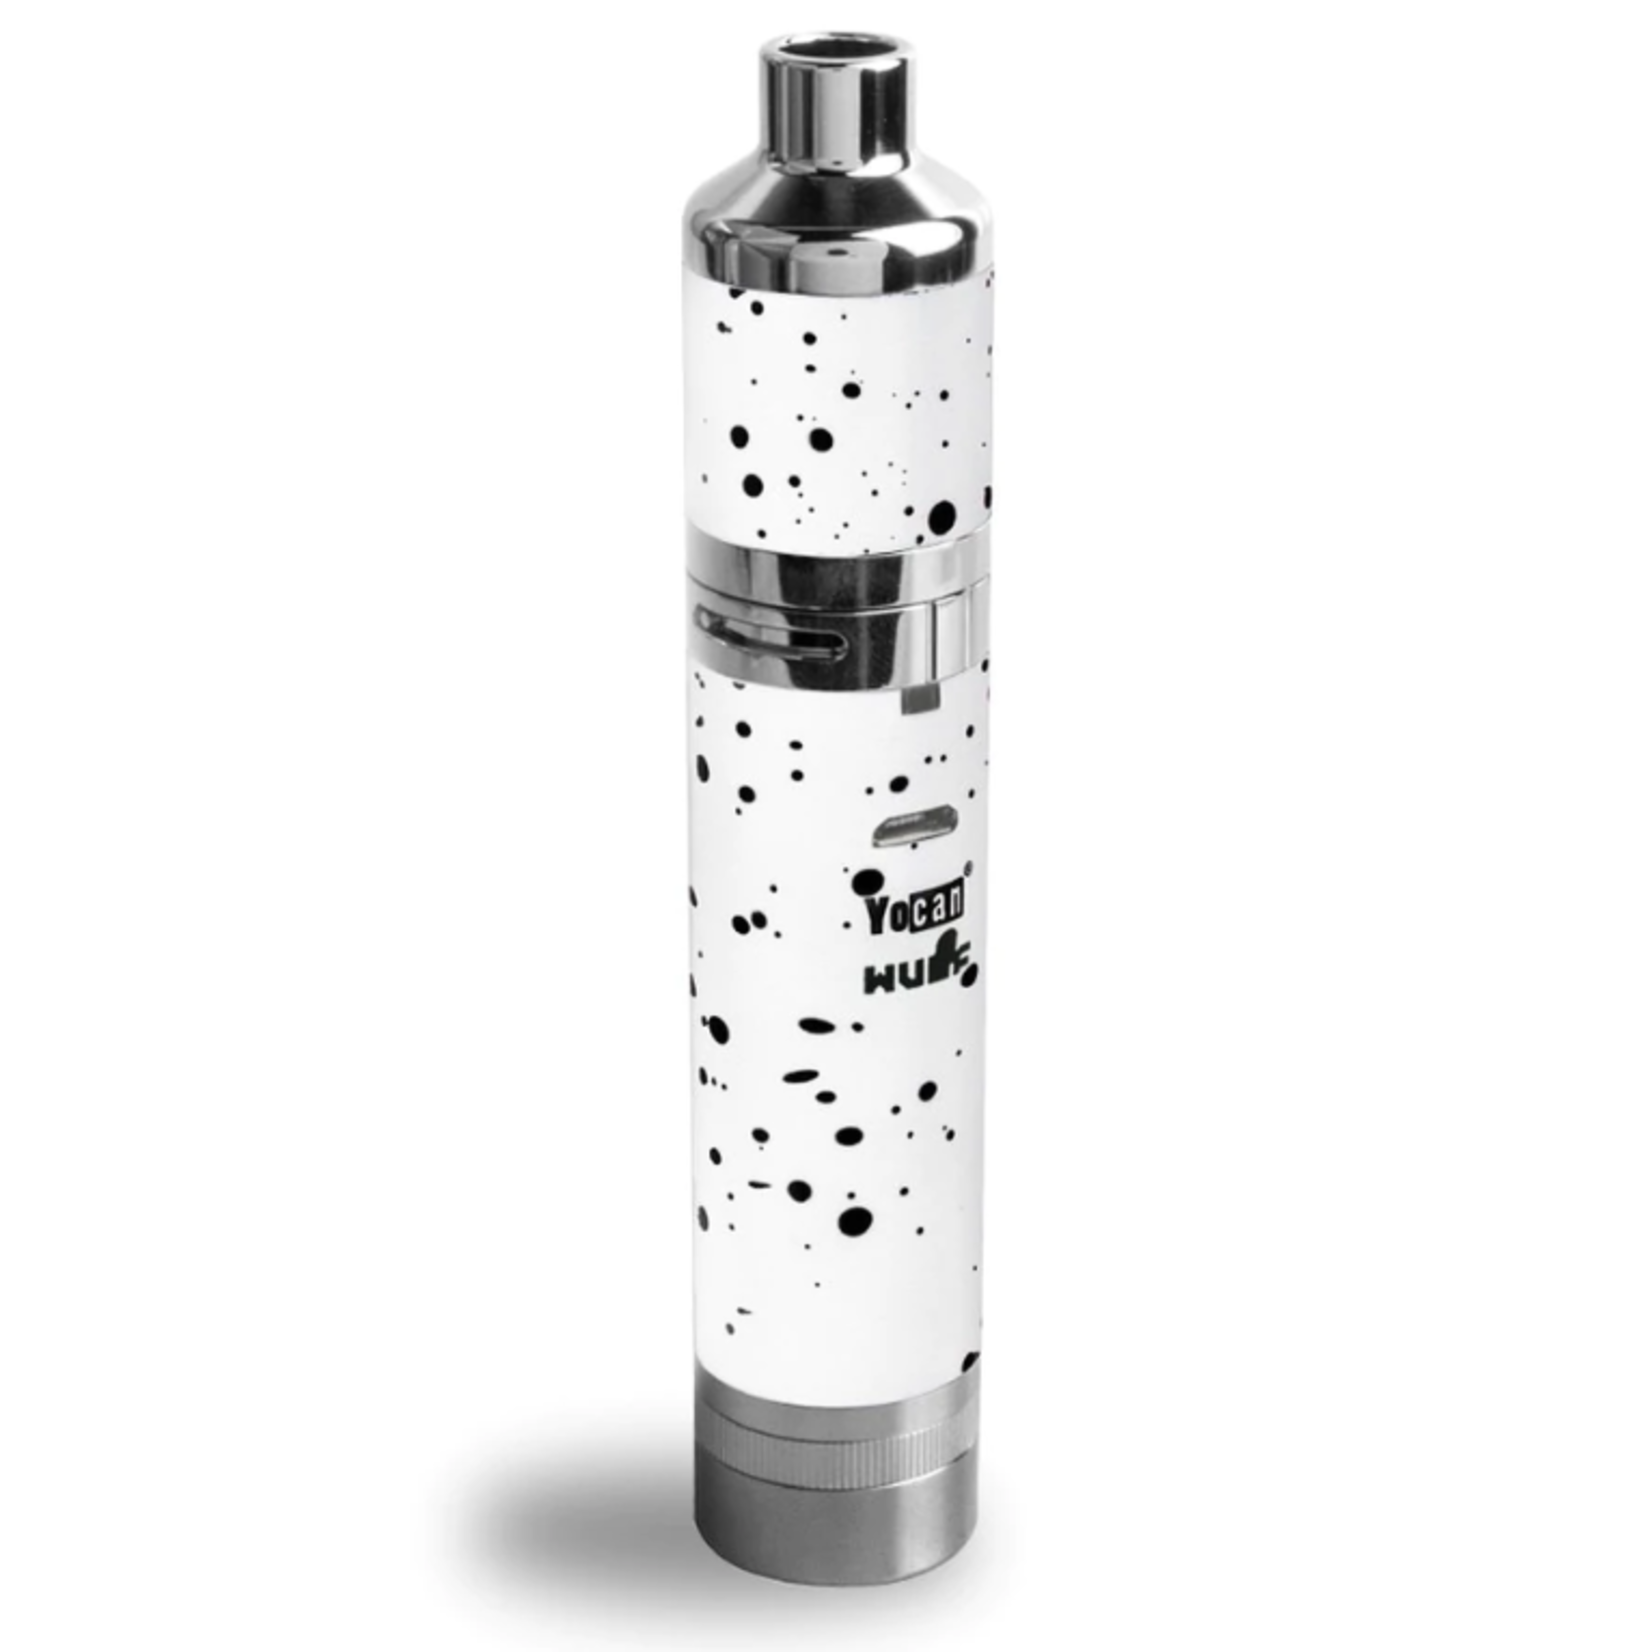 Yocan Yocan Evolve Plus XL (Wulf SE) Herbal Concentrate Vaporizer - White w/ Black Spatter